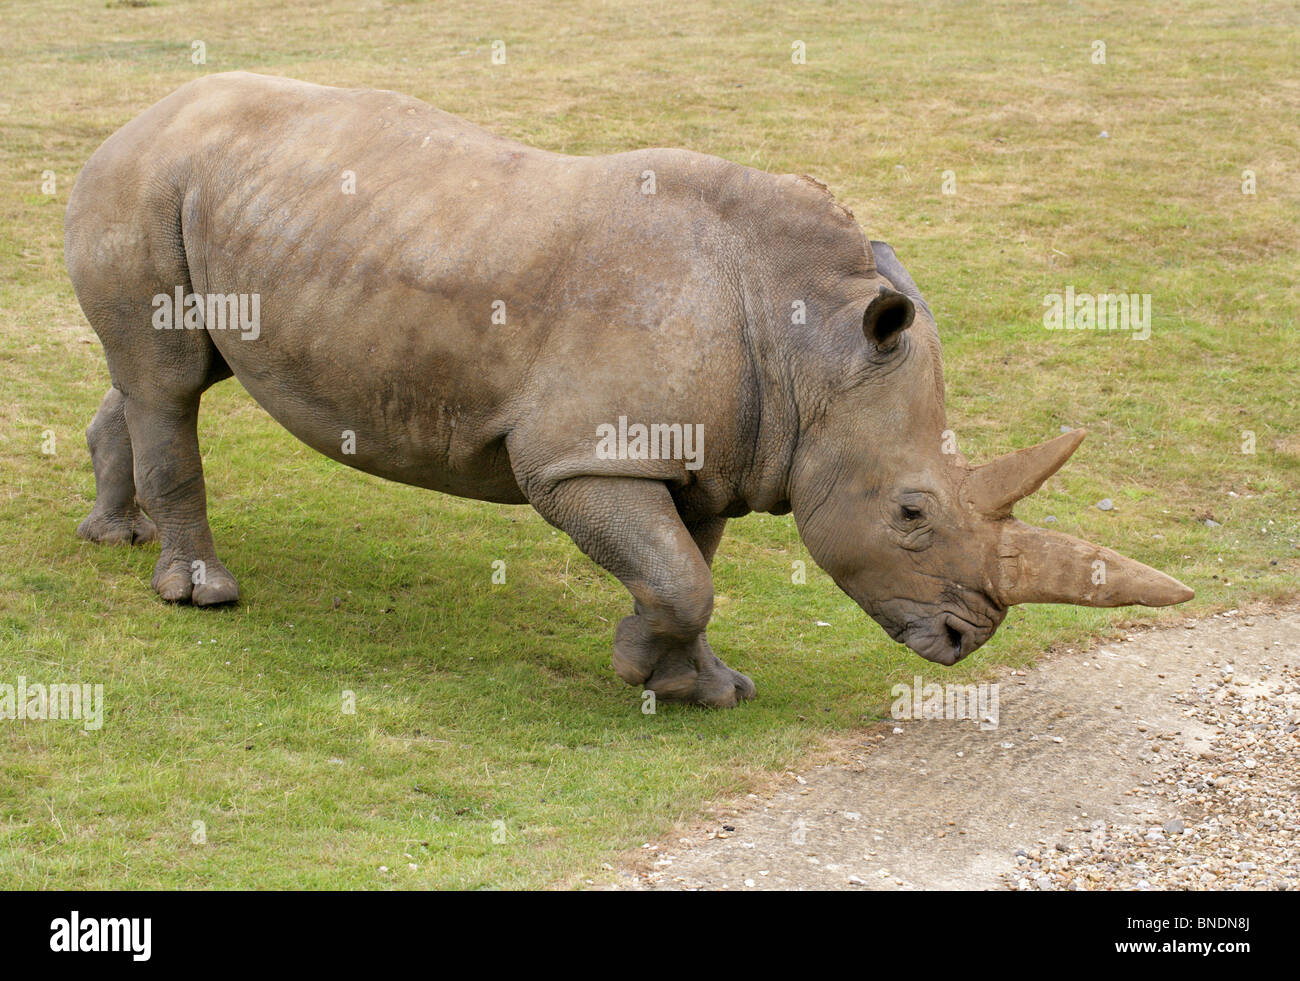 Southern White Rhinoceros, Ceratotherium simum, Rhinocerotidae. Africa. Stock Photo